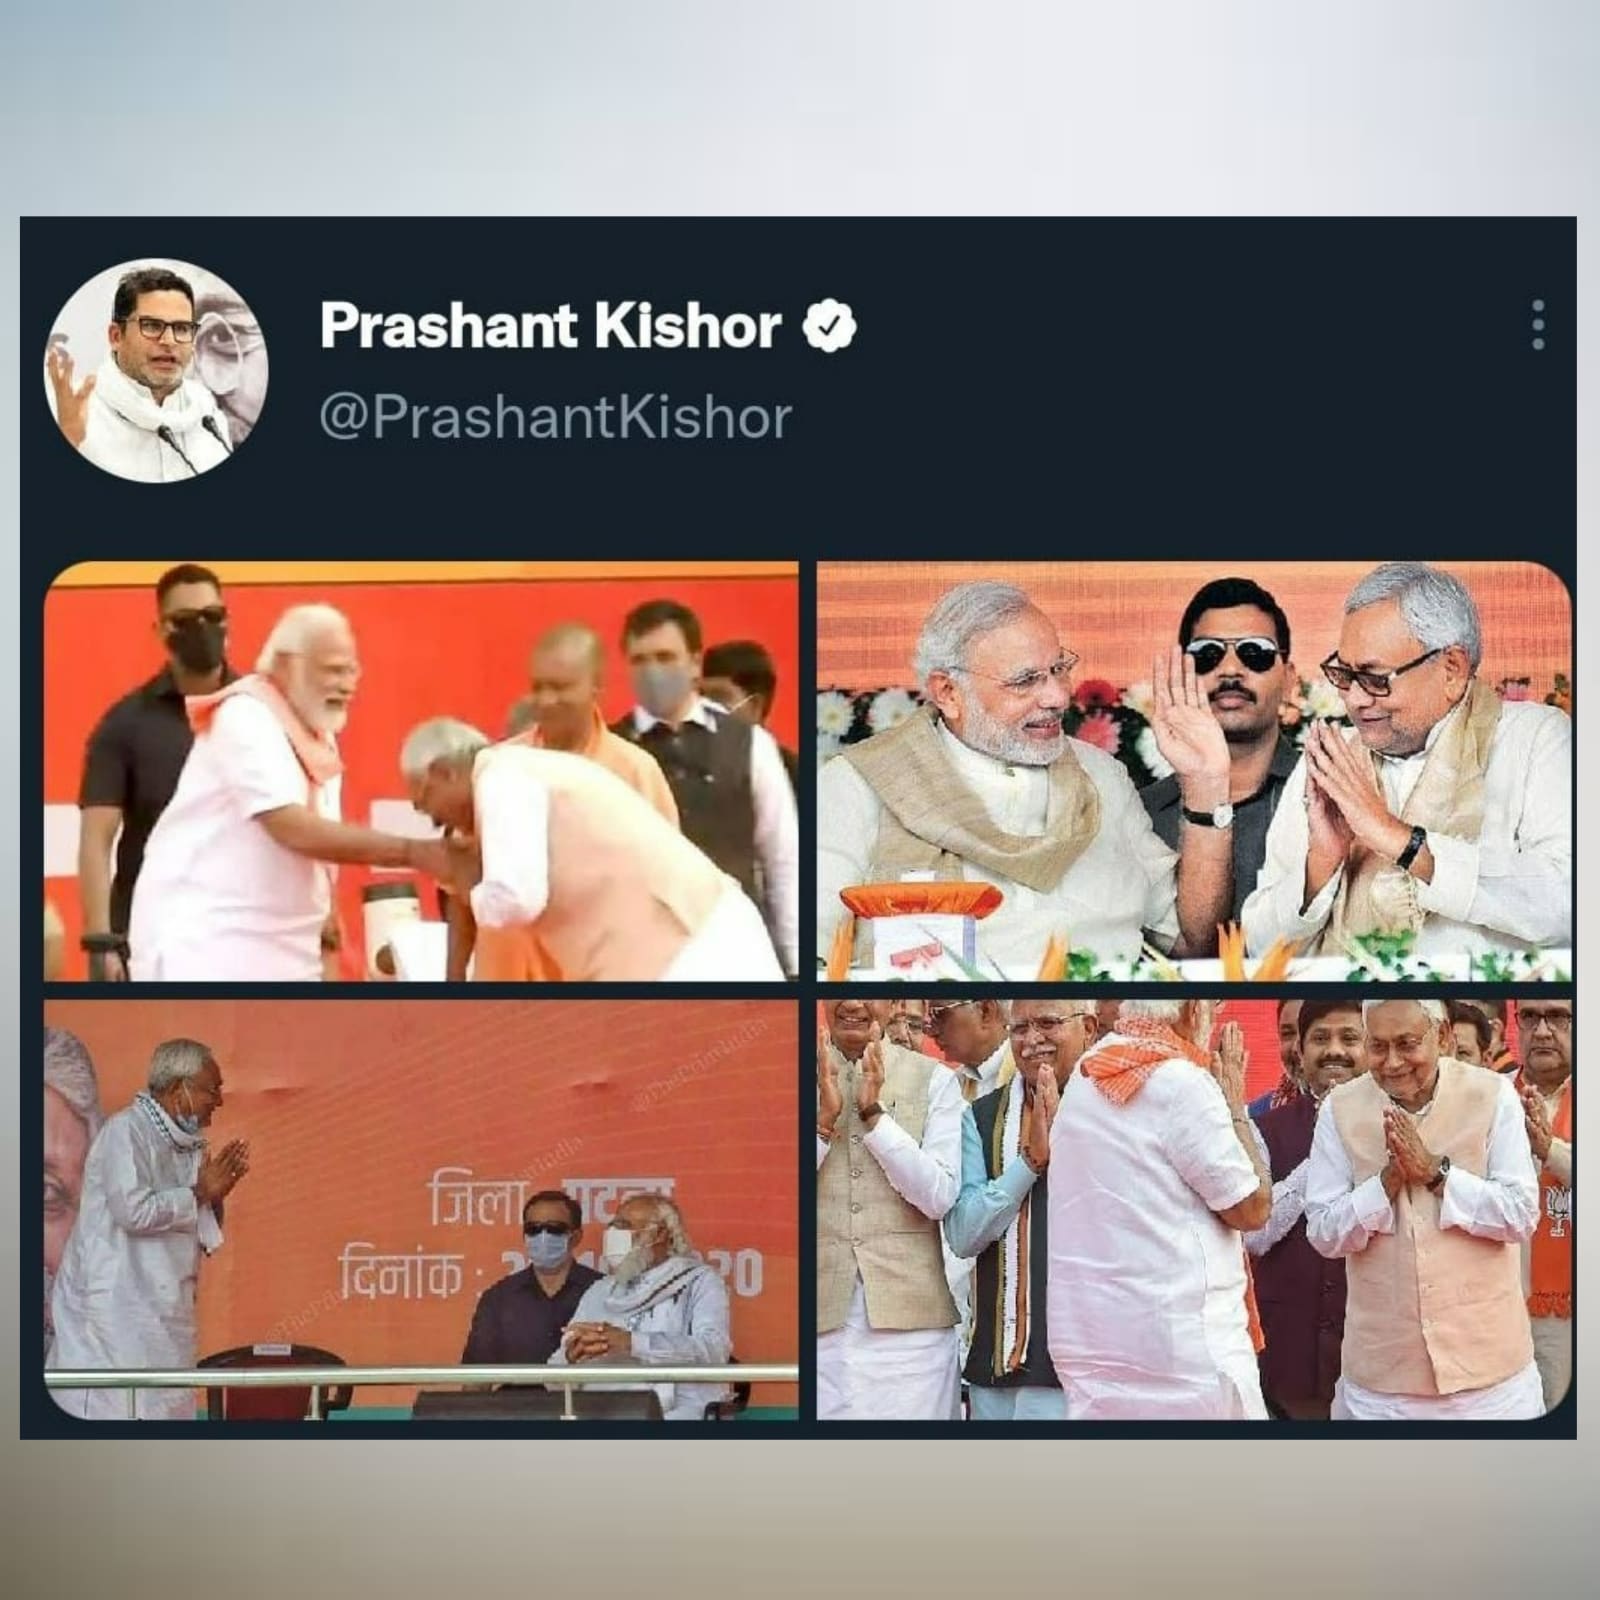 Prashant Kishor deleted the tweet minutes after posting it. 